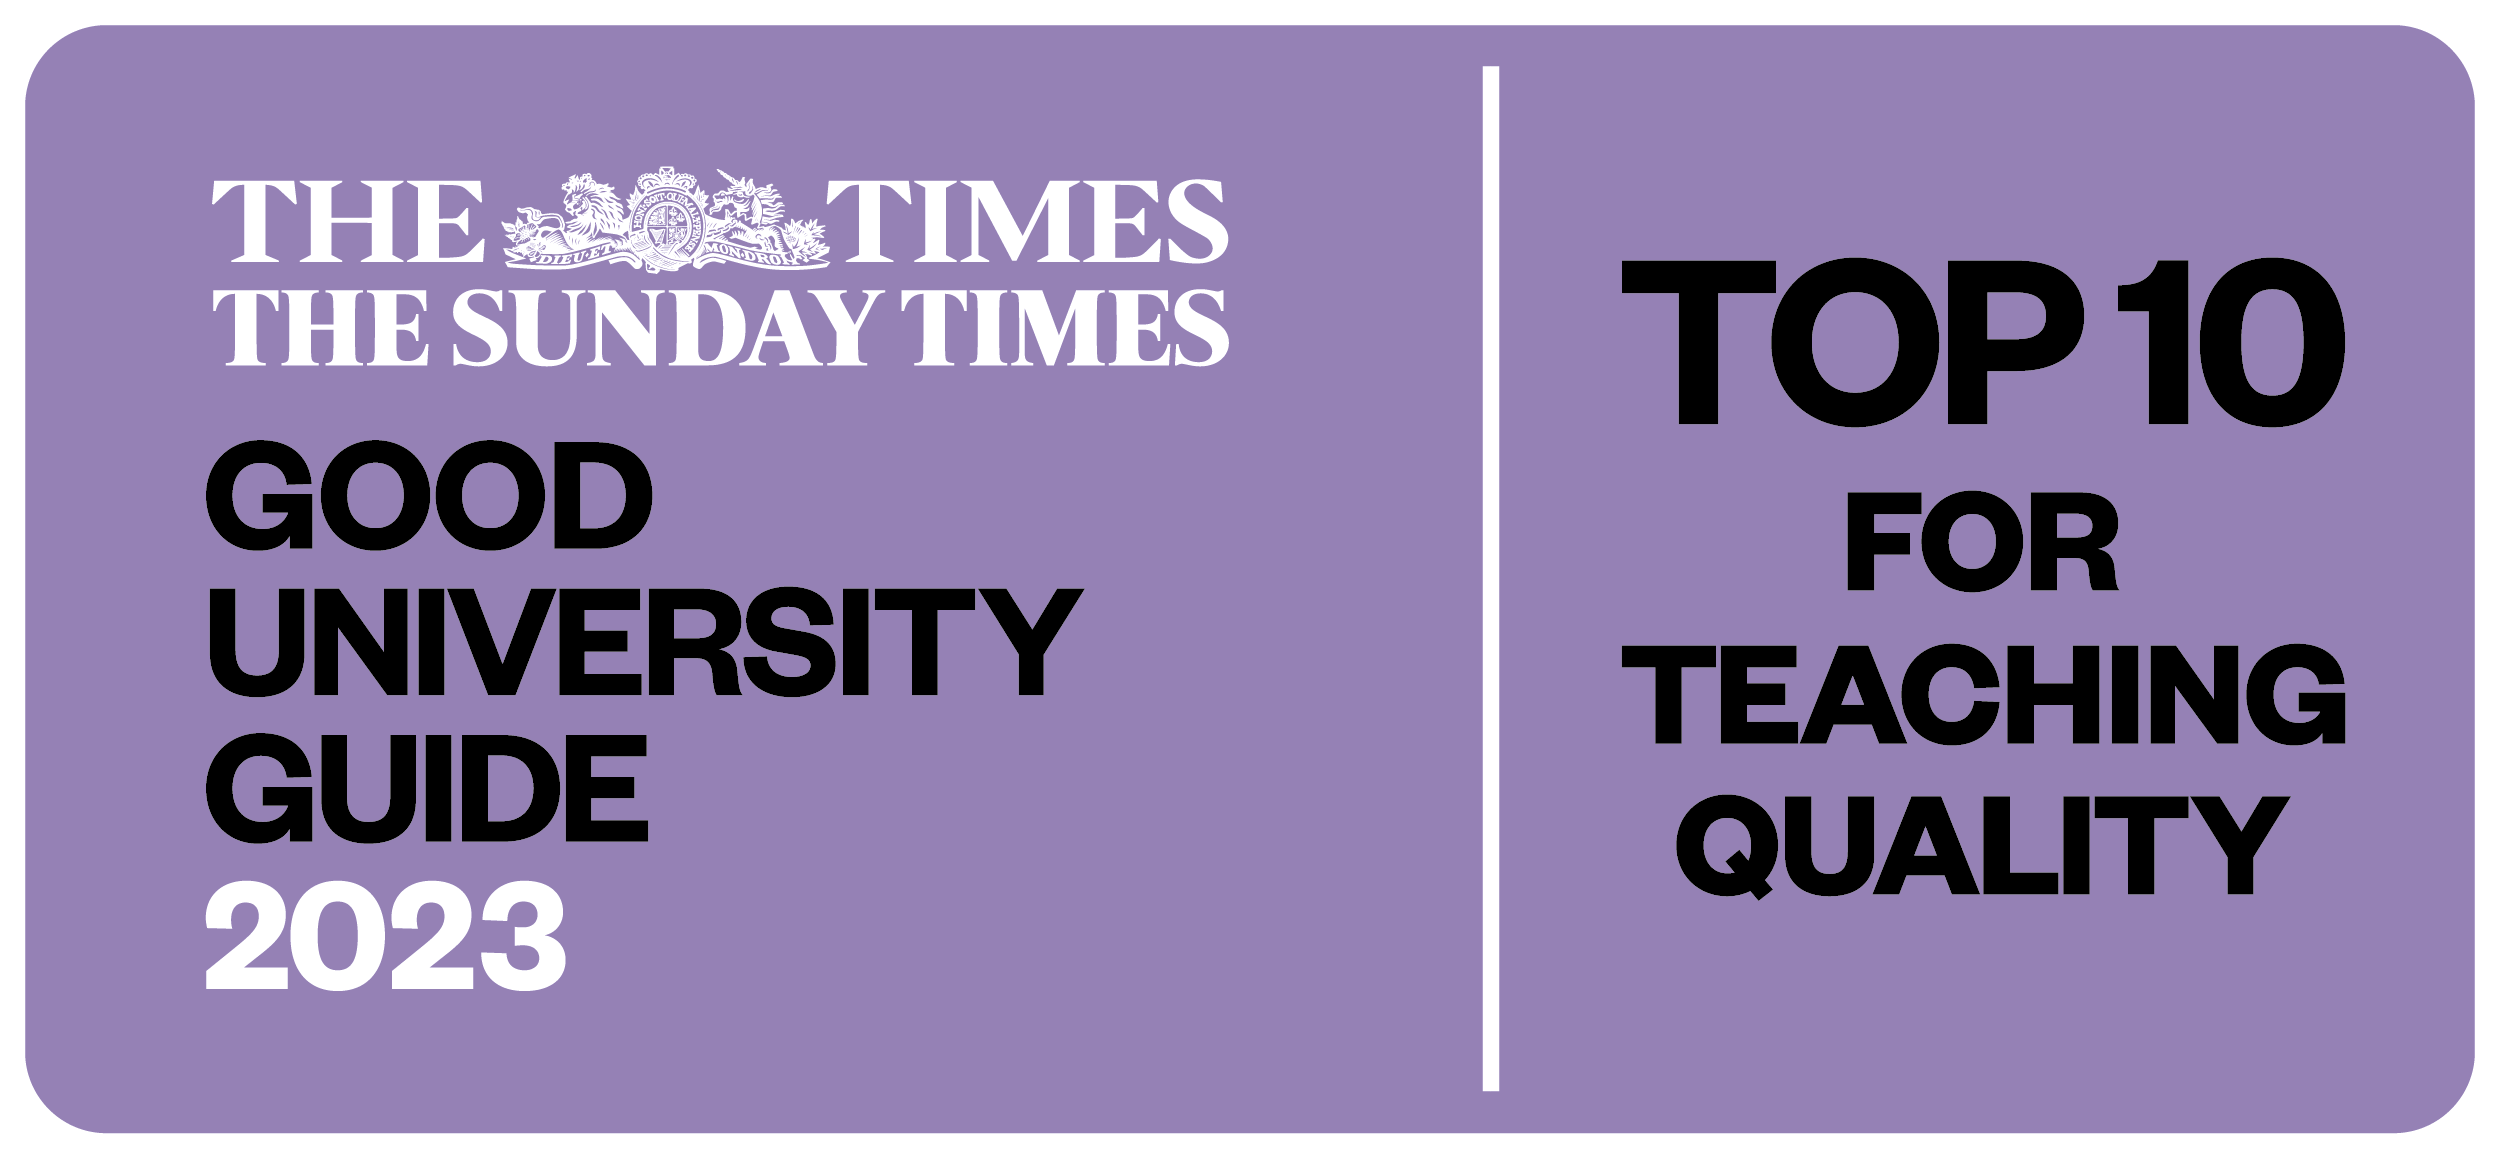 Good University Guide logo top ten for teaching quality